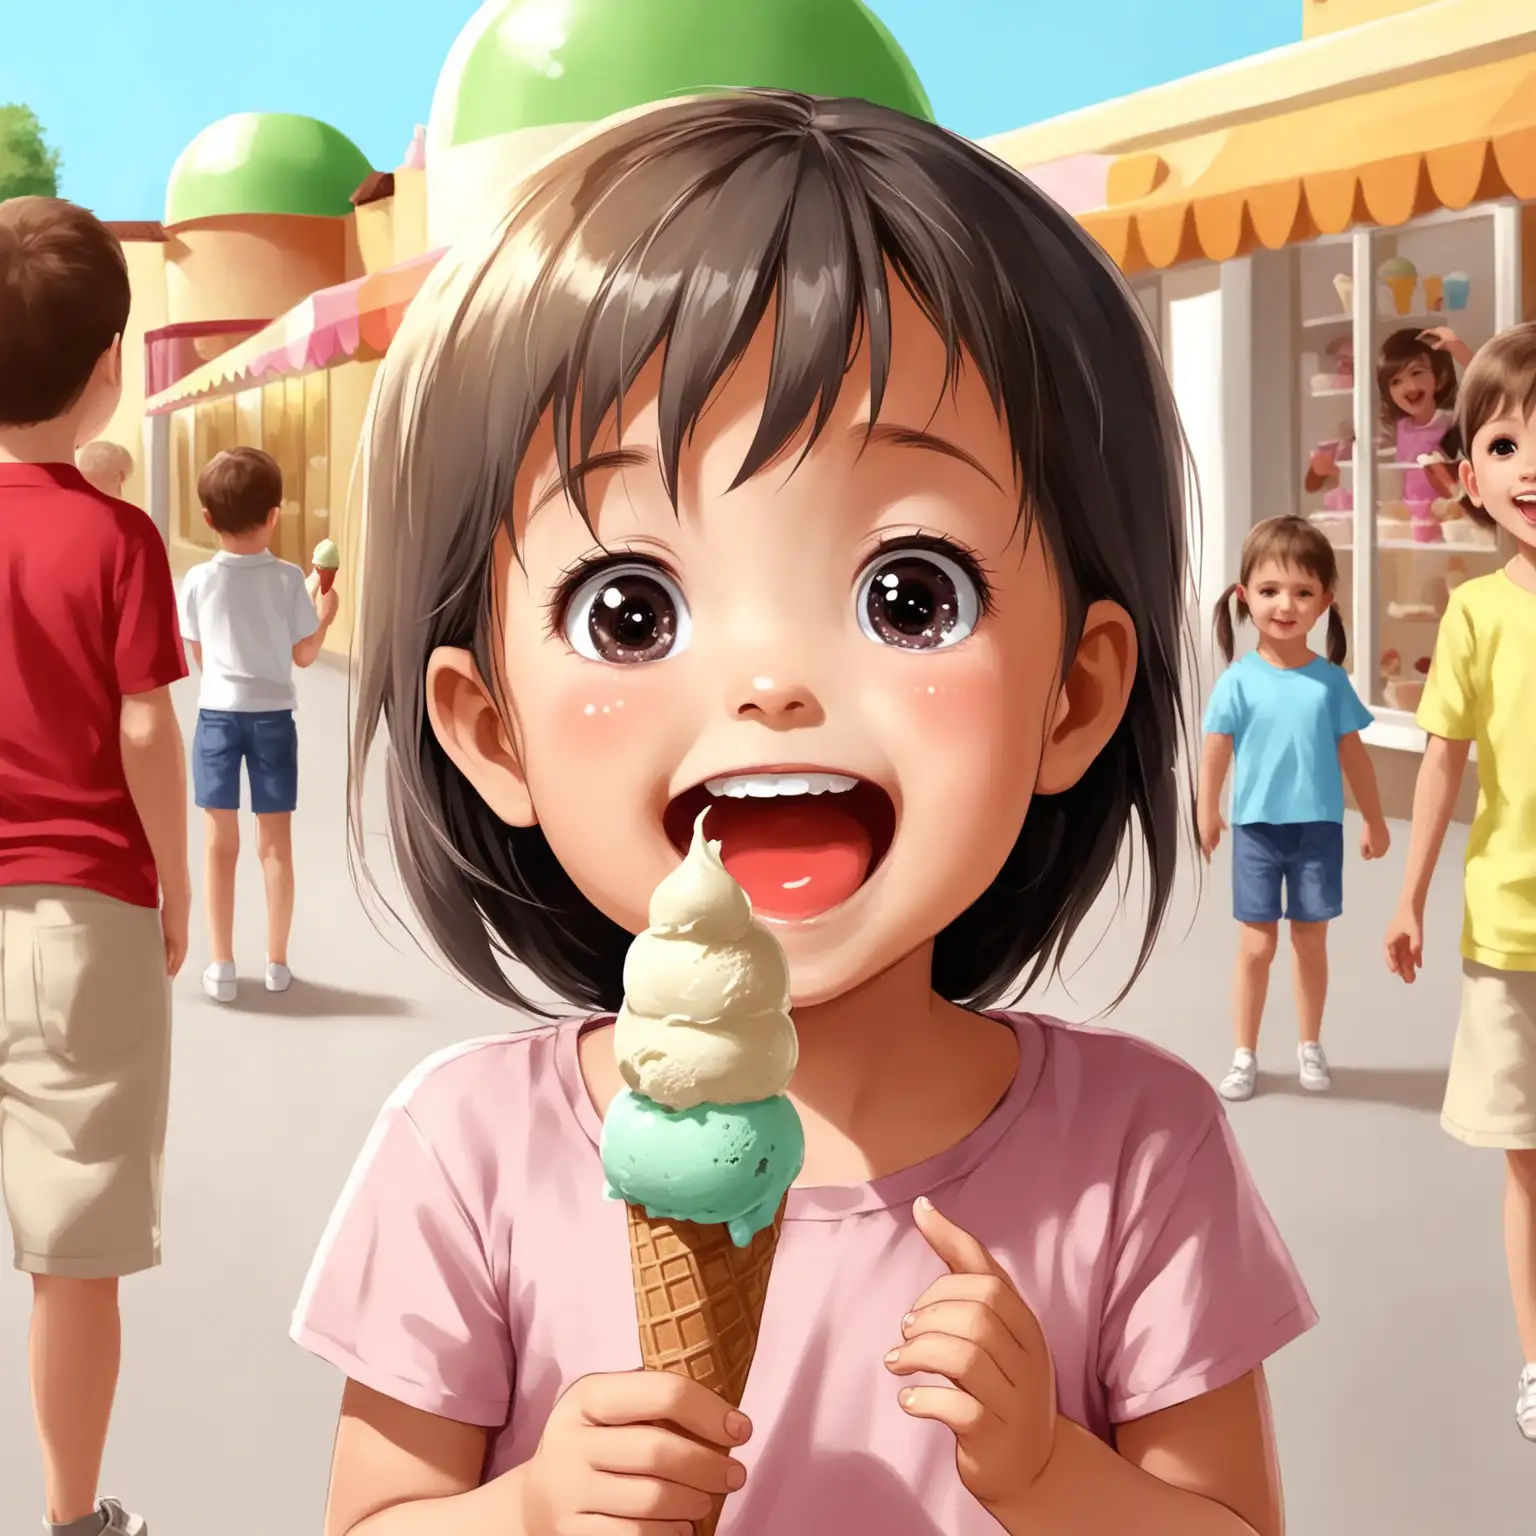 show a child happy with ice cream
